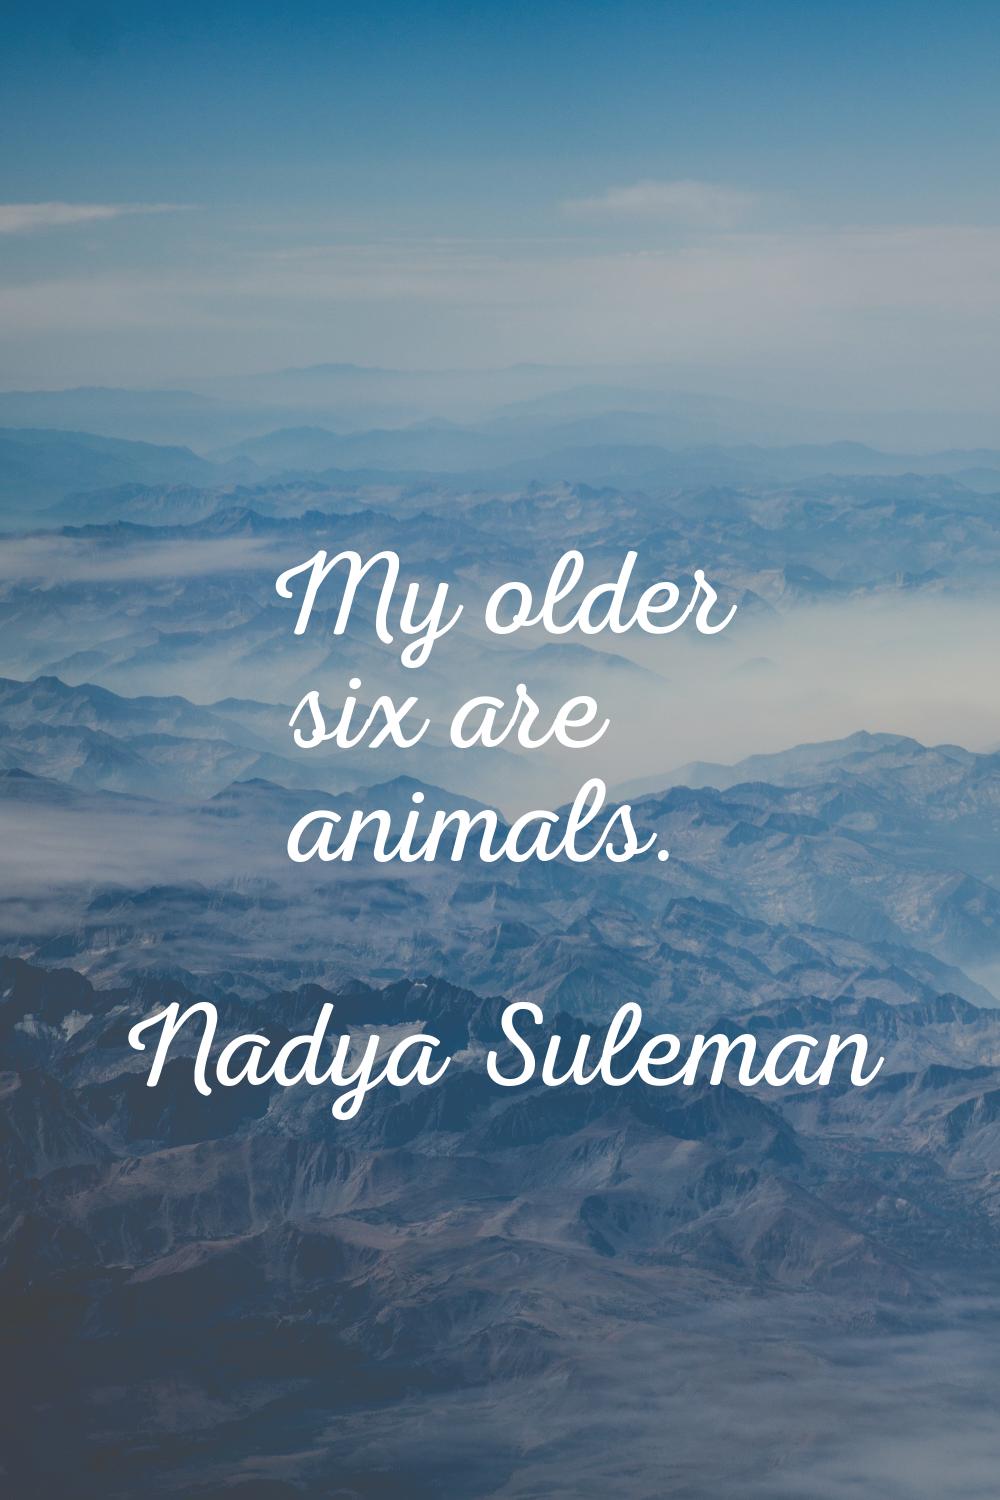 My older six are animals.